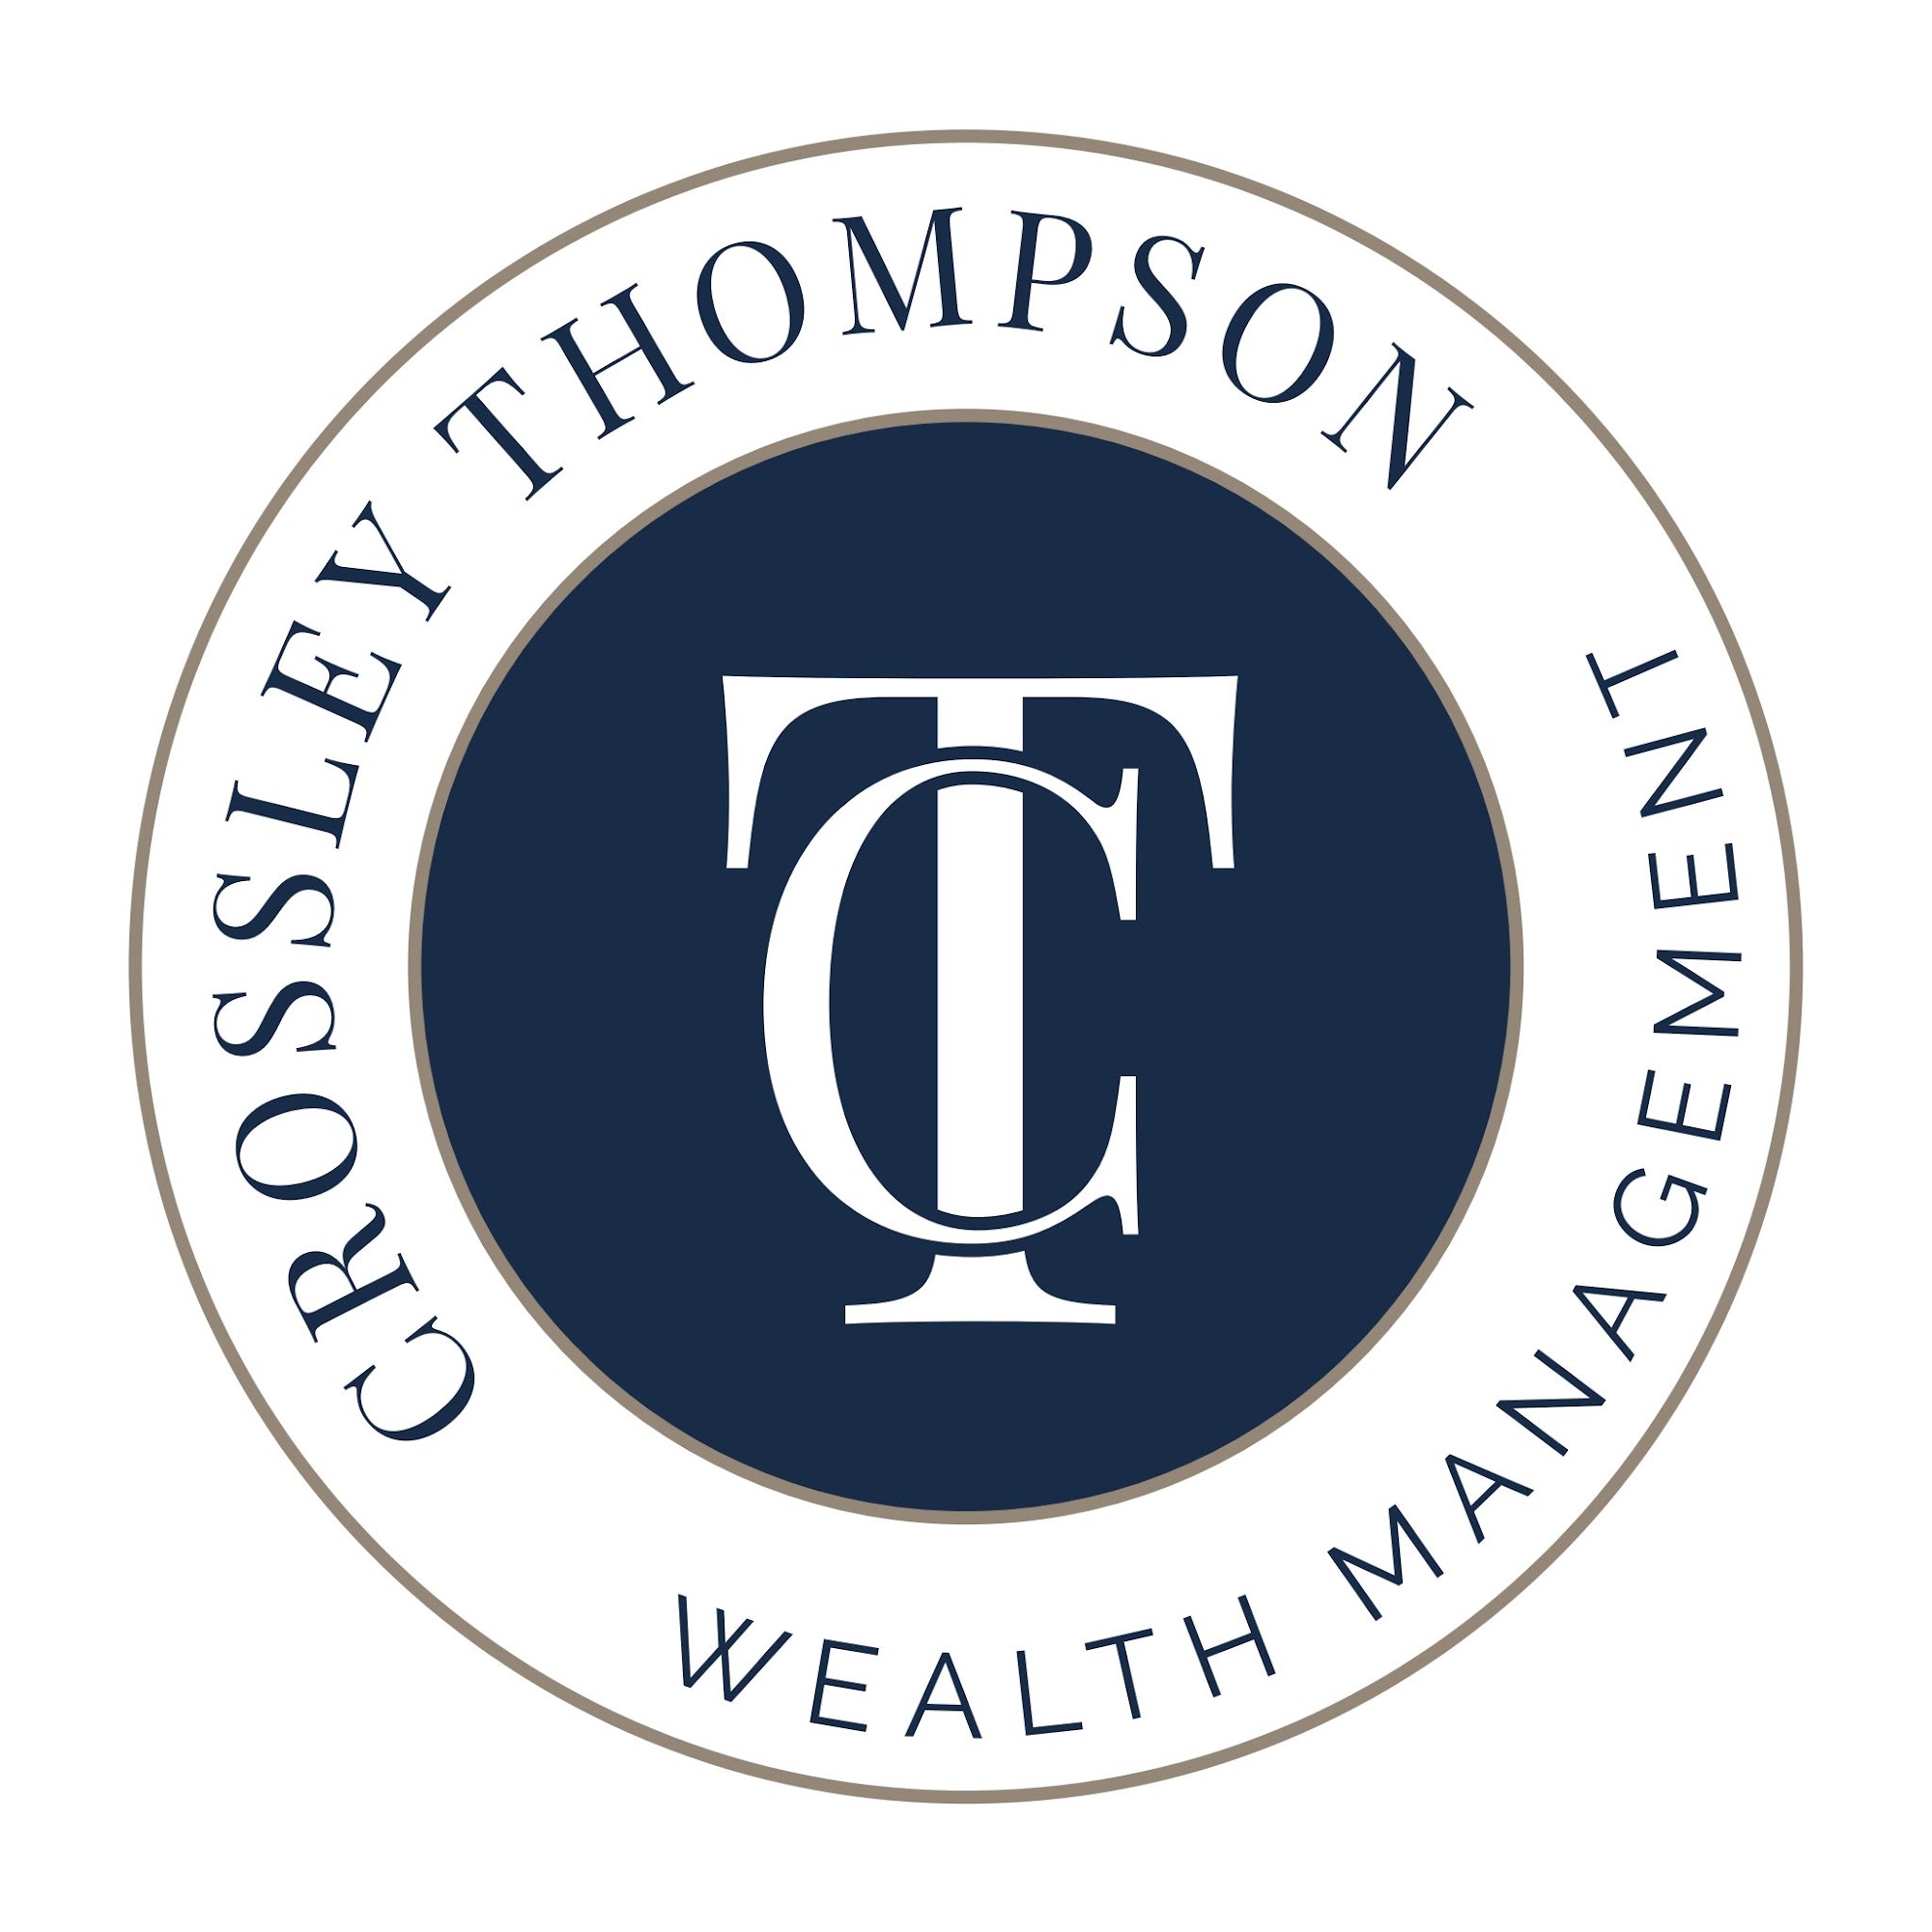 Crossley Thompson Wealth Management Ltd